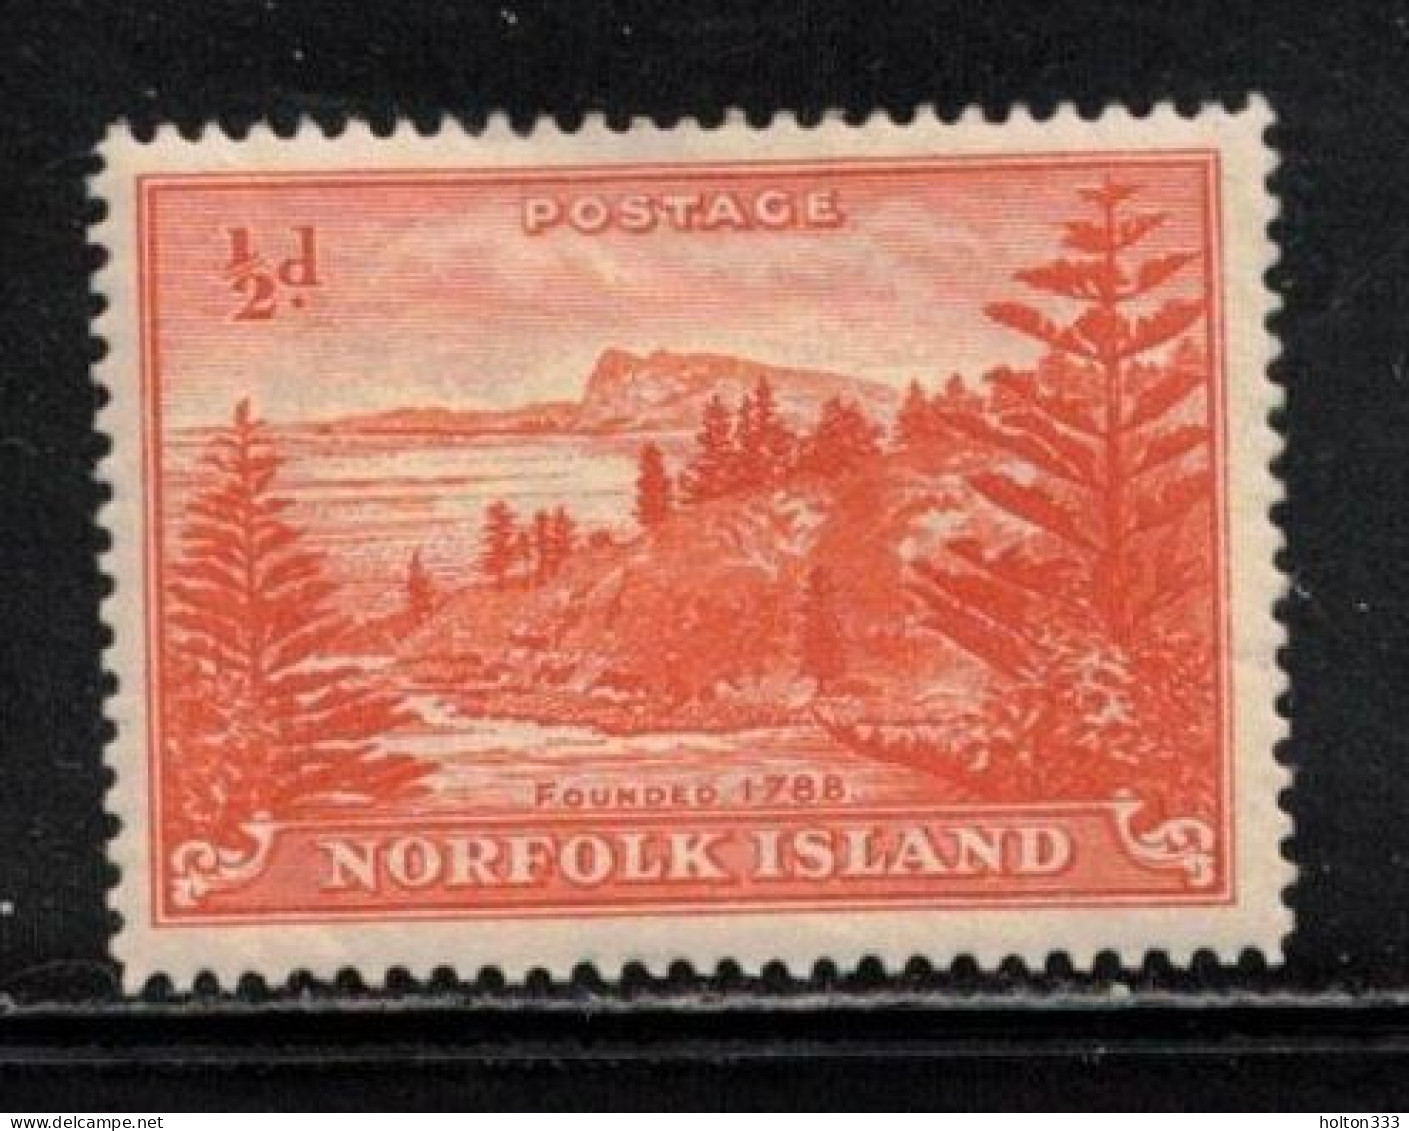 NORFOLK ISLAND Scott # 1 MH - Founded 1788 - Norfolk Island